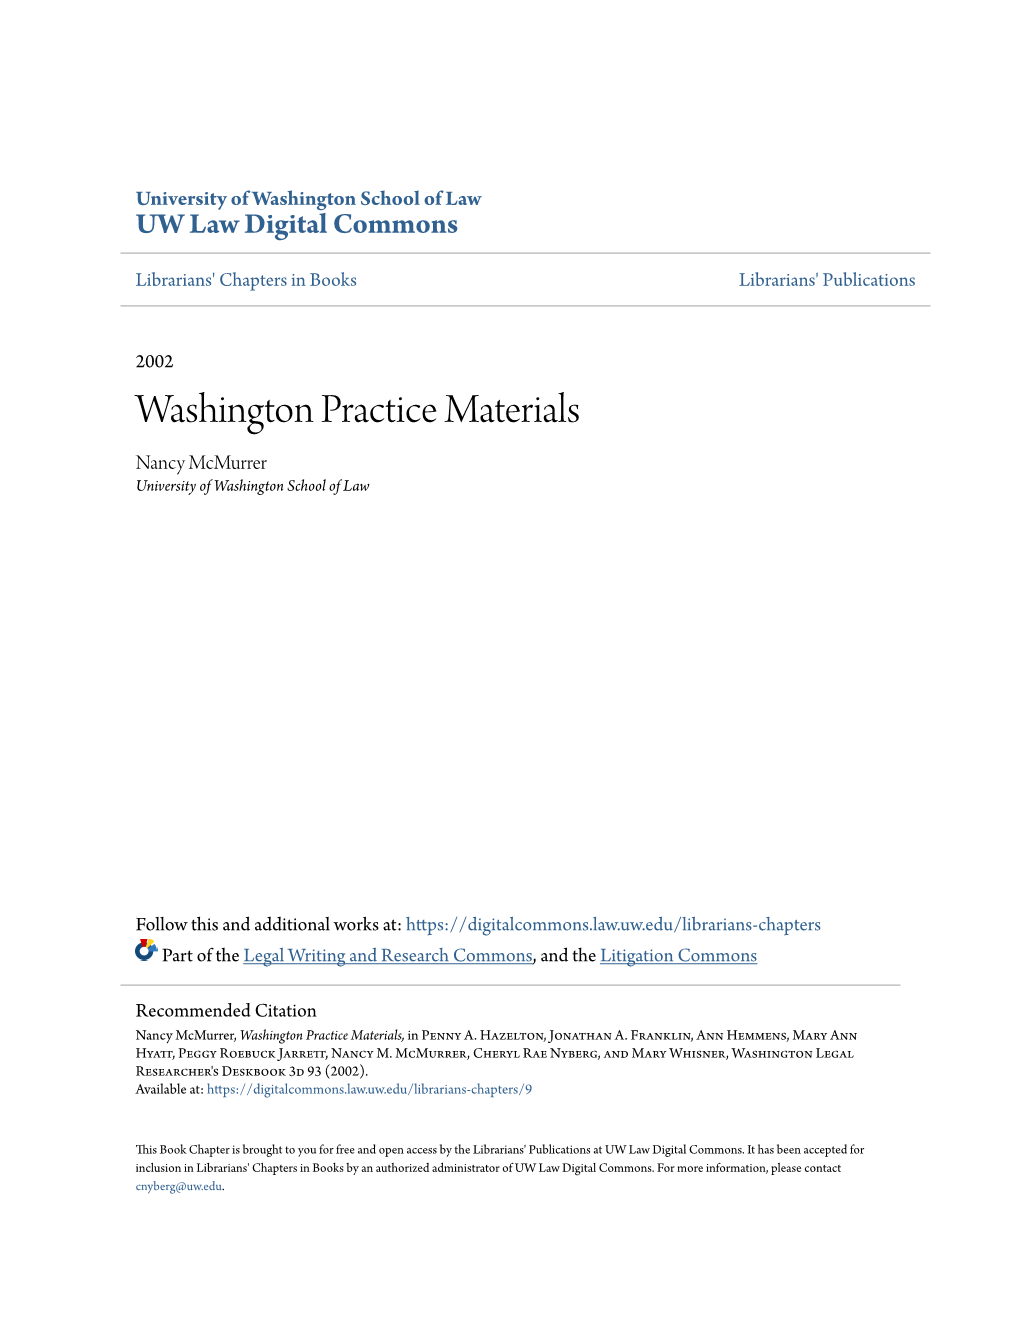 Washington Practice Materials Nancy Mcmurrer University of Washington School of Law